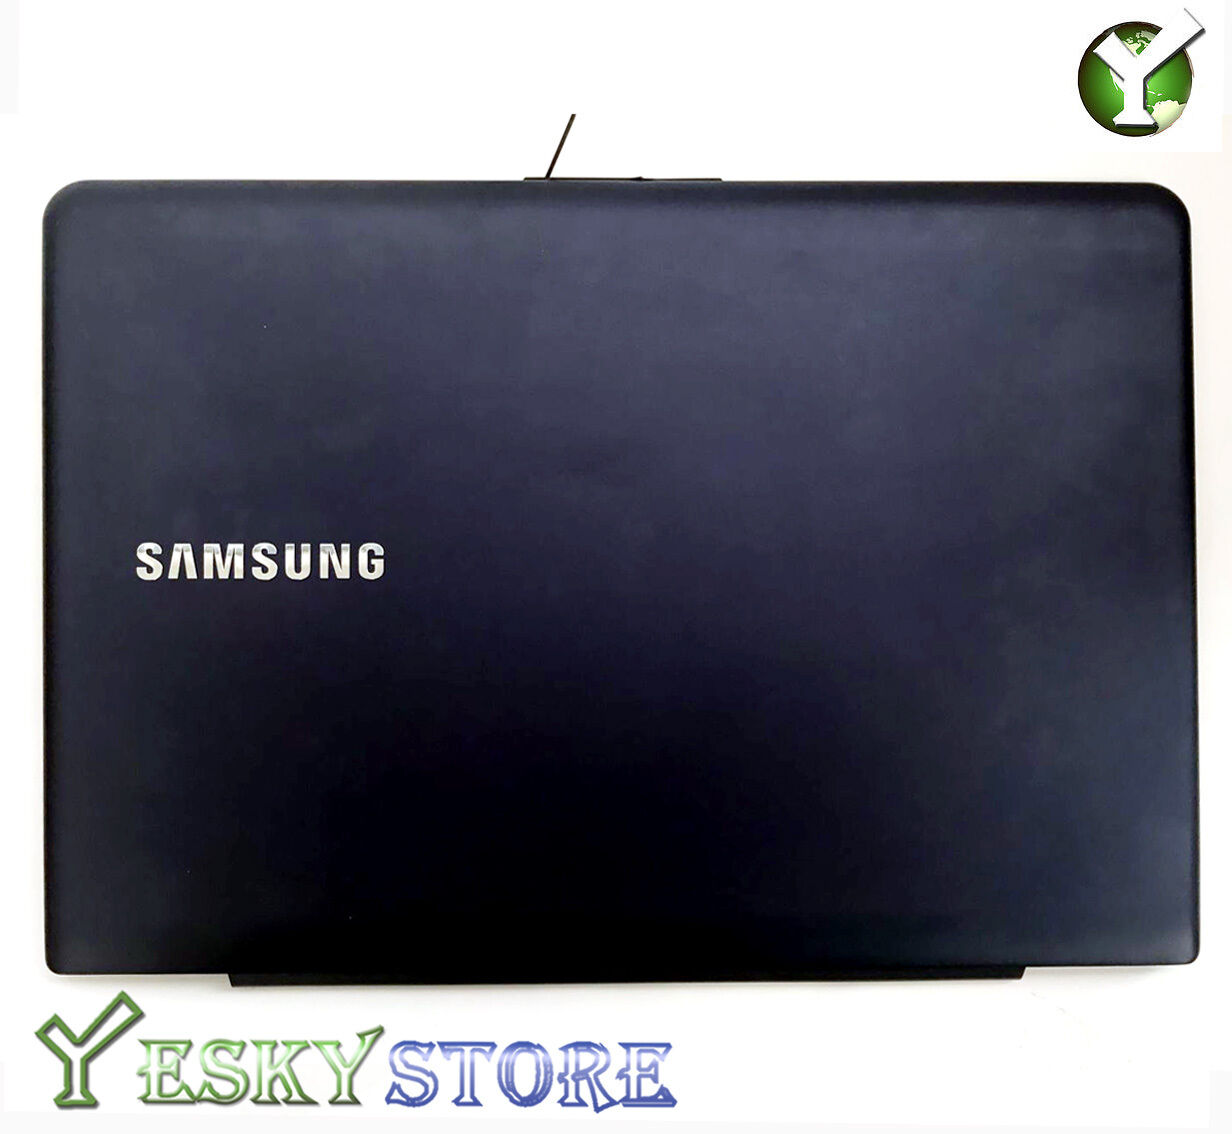 Samsung NP535U3C NP530U3C NP530U3B LCD Back Cover BA75-03709F Blue US Seller